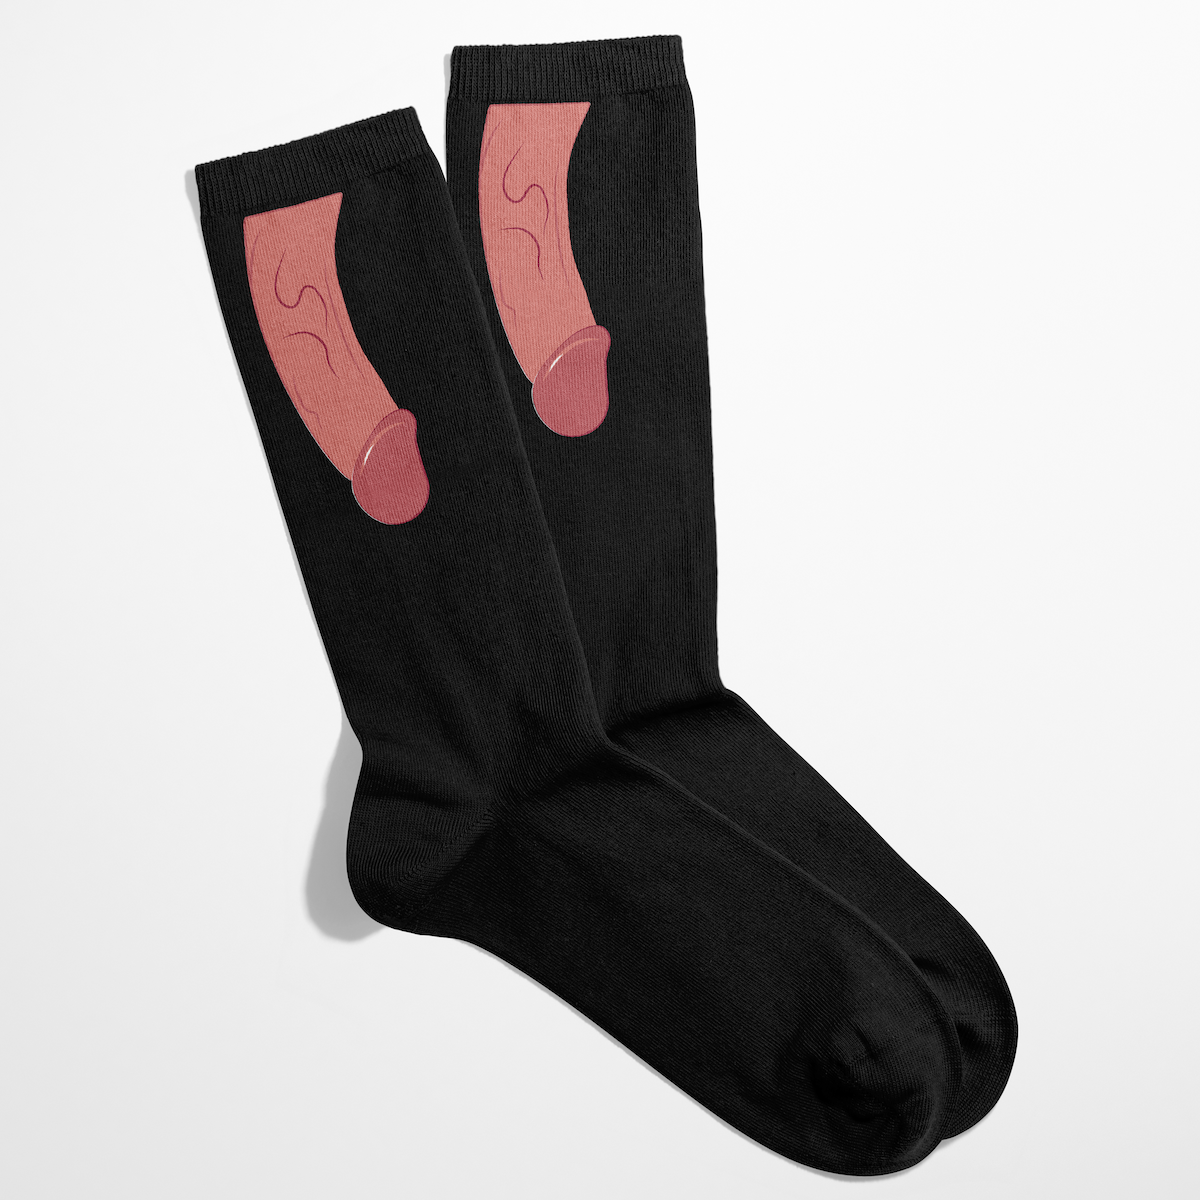 Cocky Socks